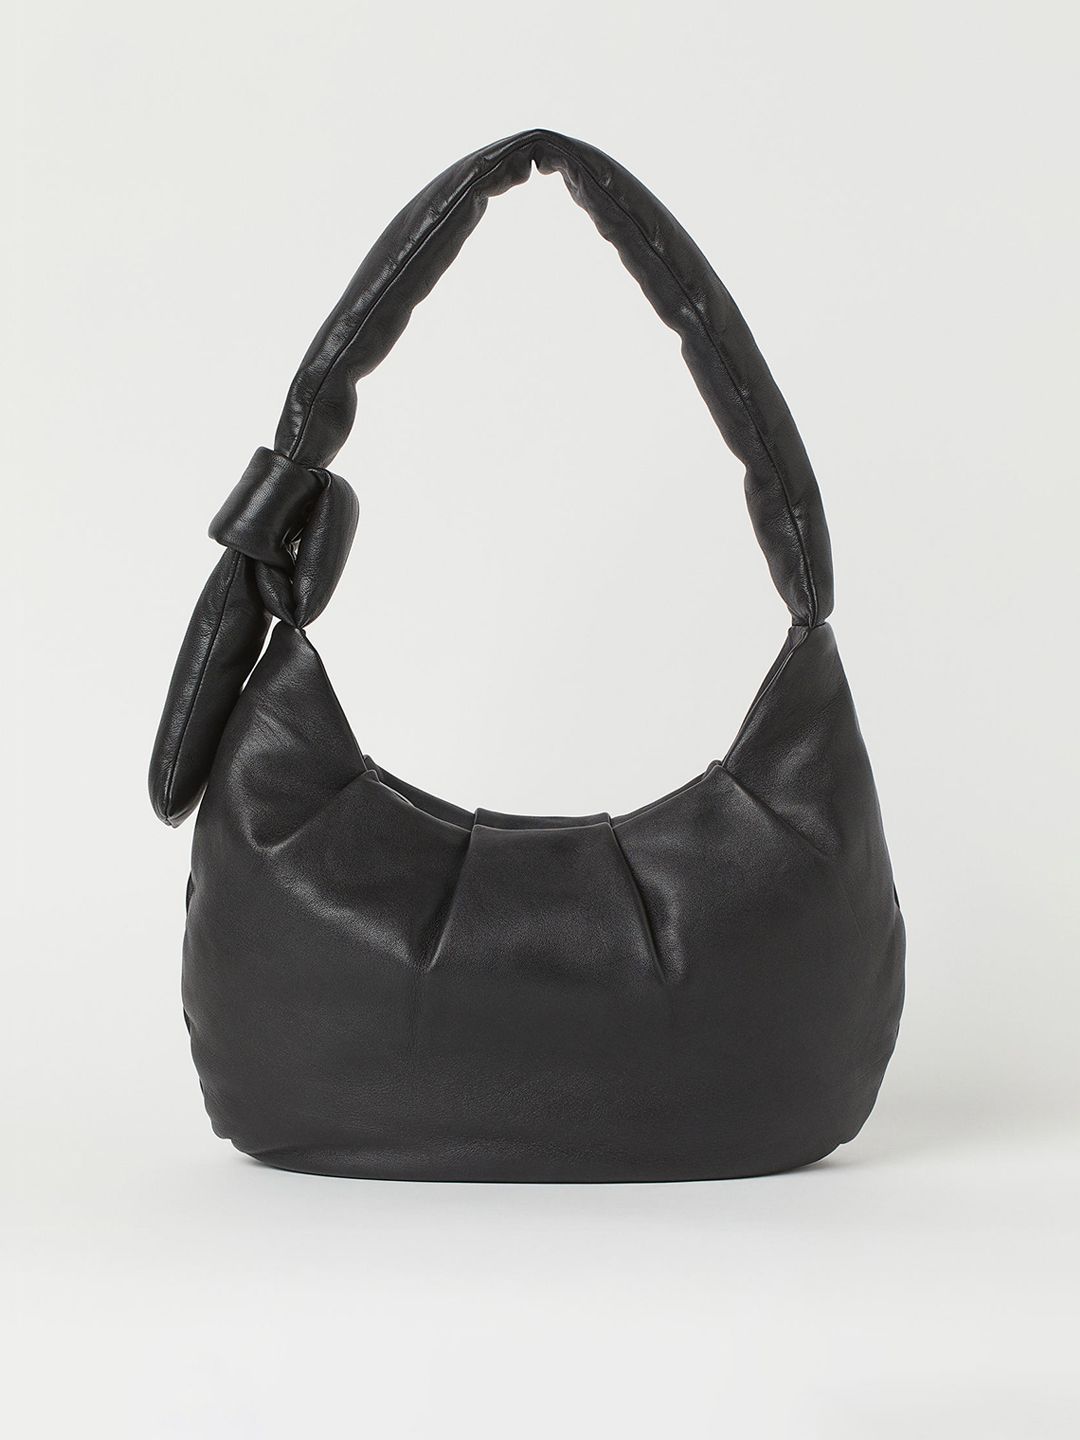 H&M Women Black Soft Leather Shoulder Bag Price in India